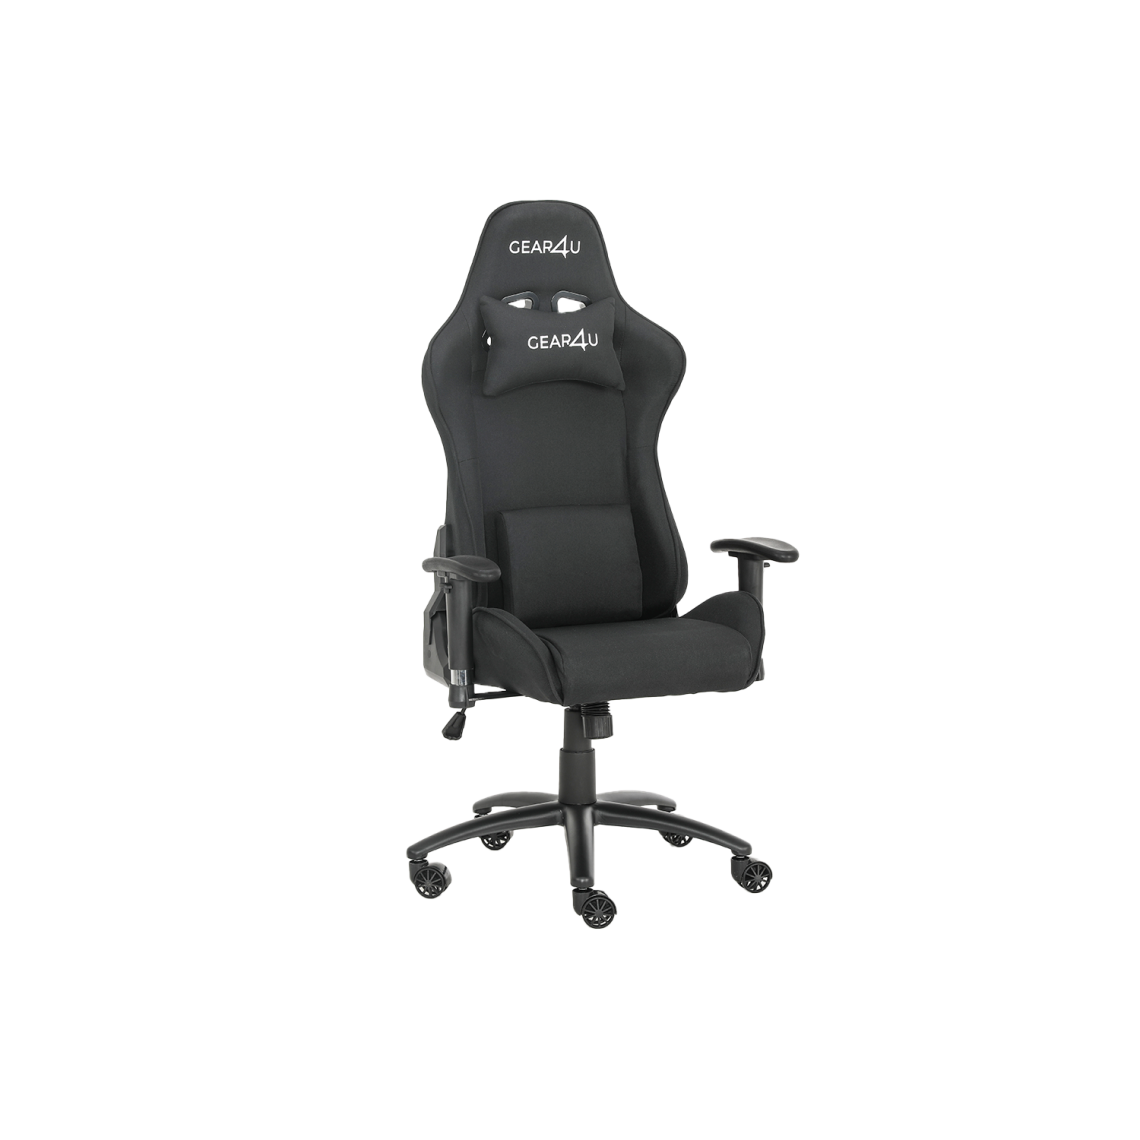 Gear4 - Chaise gaming Elite Gear4u - Fauteuil gamer avec coussin nuque et lombaire - inclinable 90 à 180 degrès - Chaise gamer